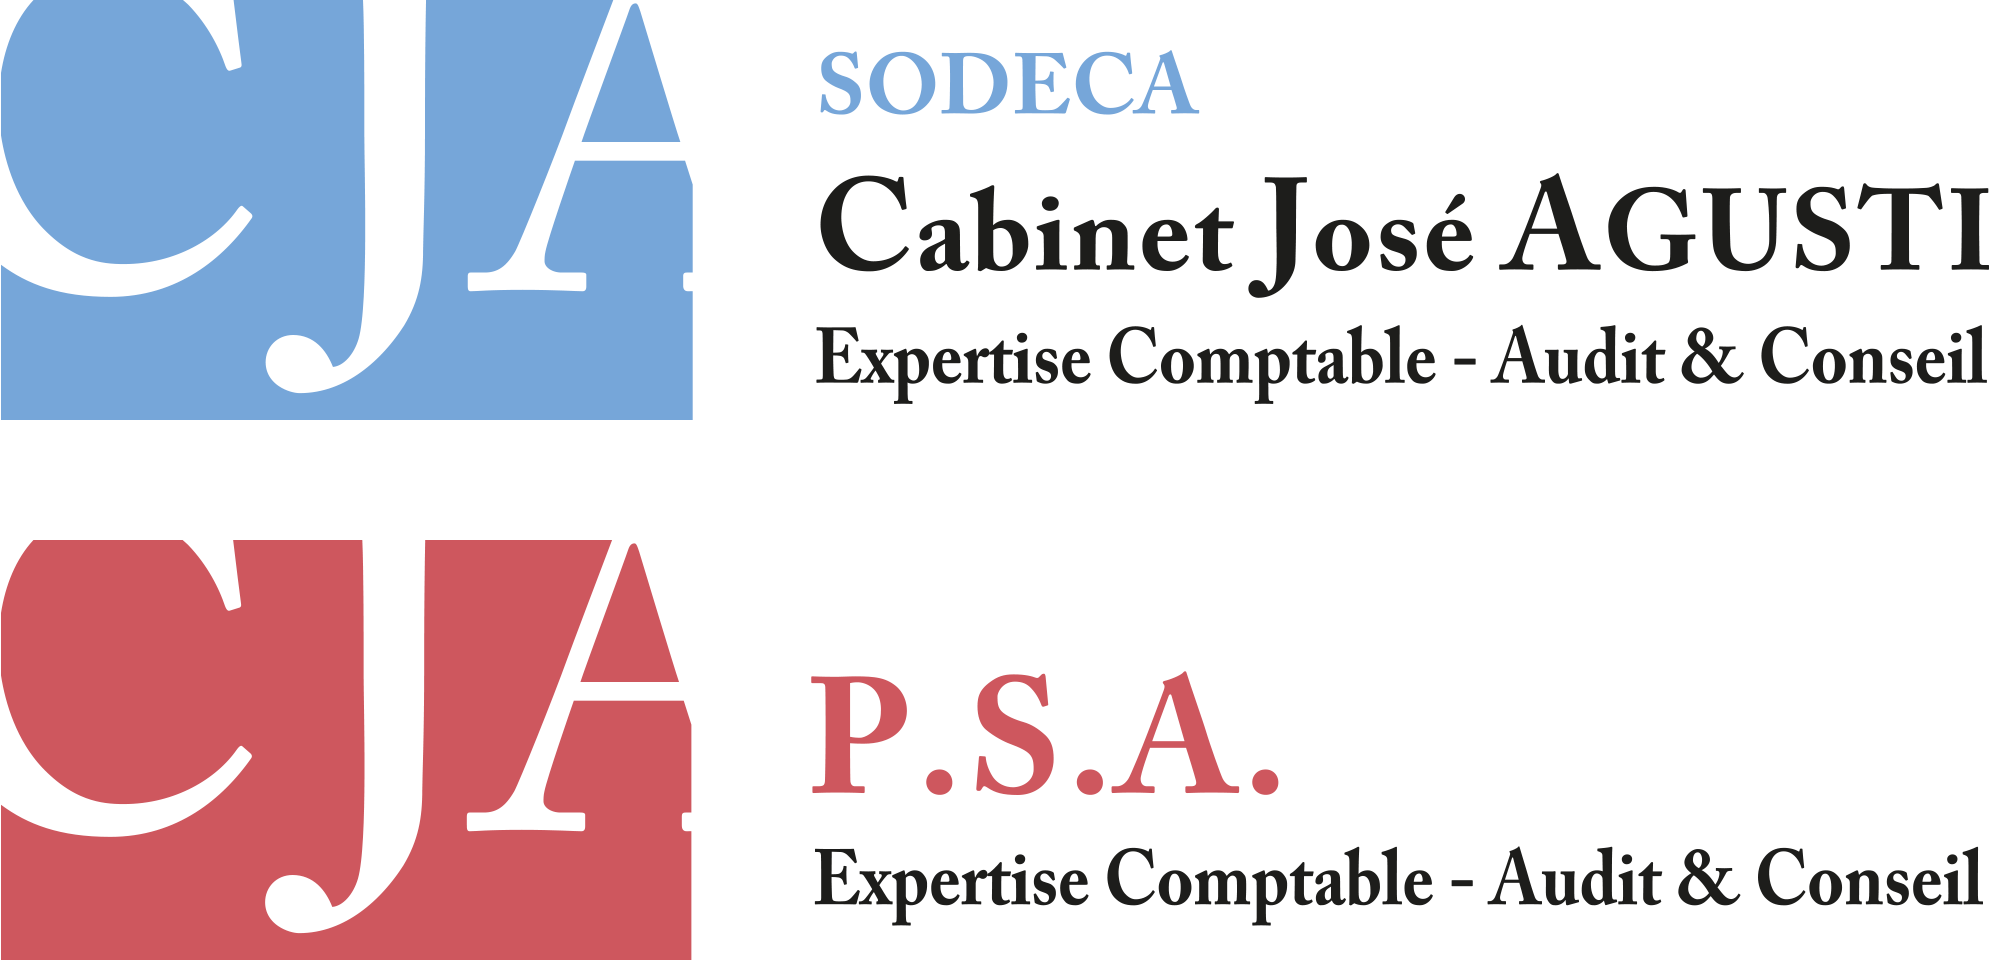 PSA - SODECA